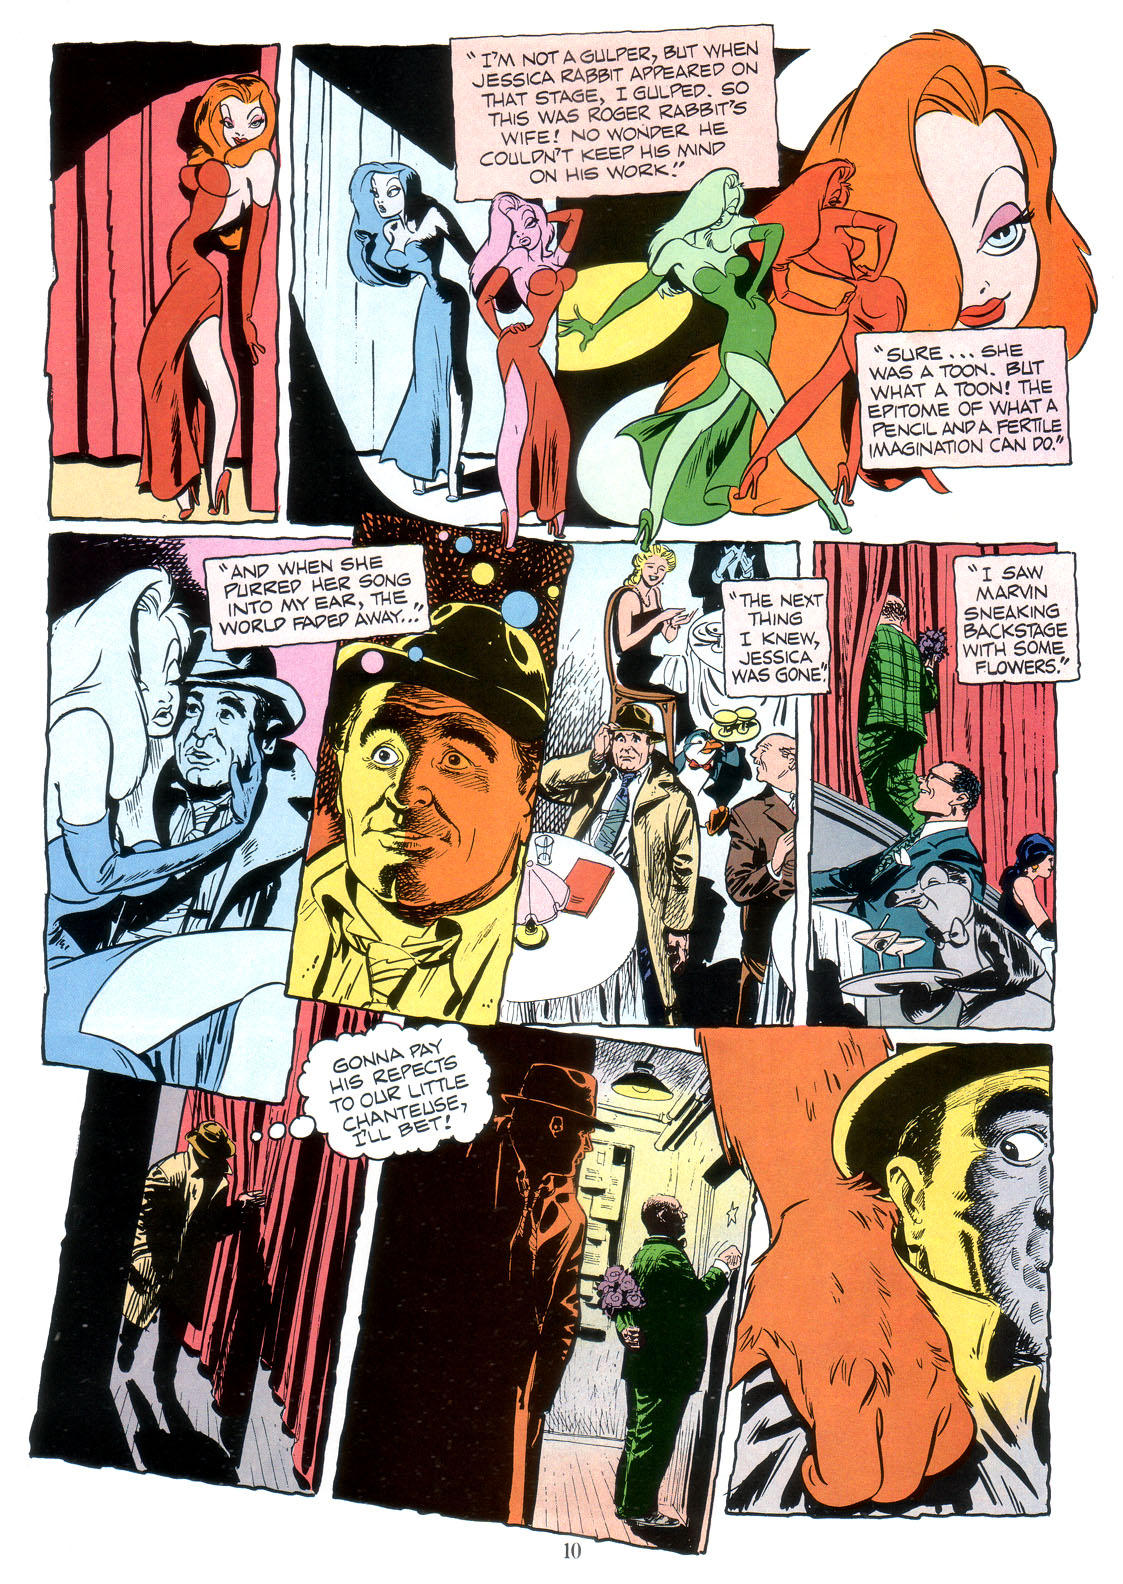 Marvel Graphic Novel issue 41 - Who Framed Roger Rabbit - Page 12